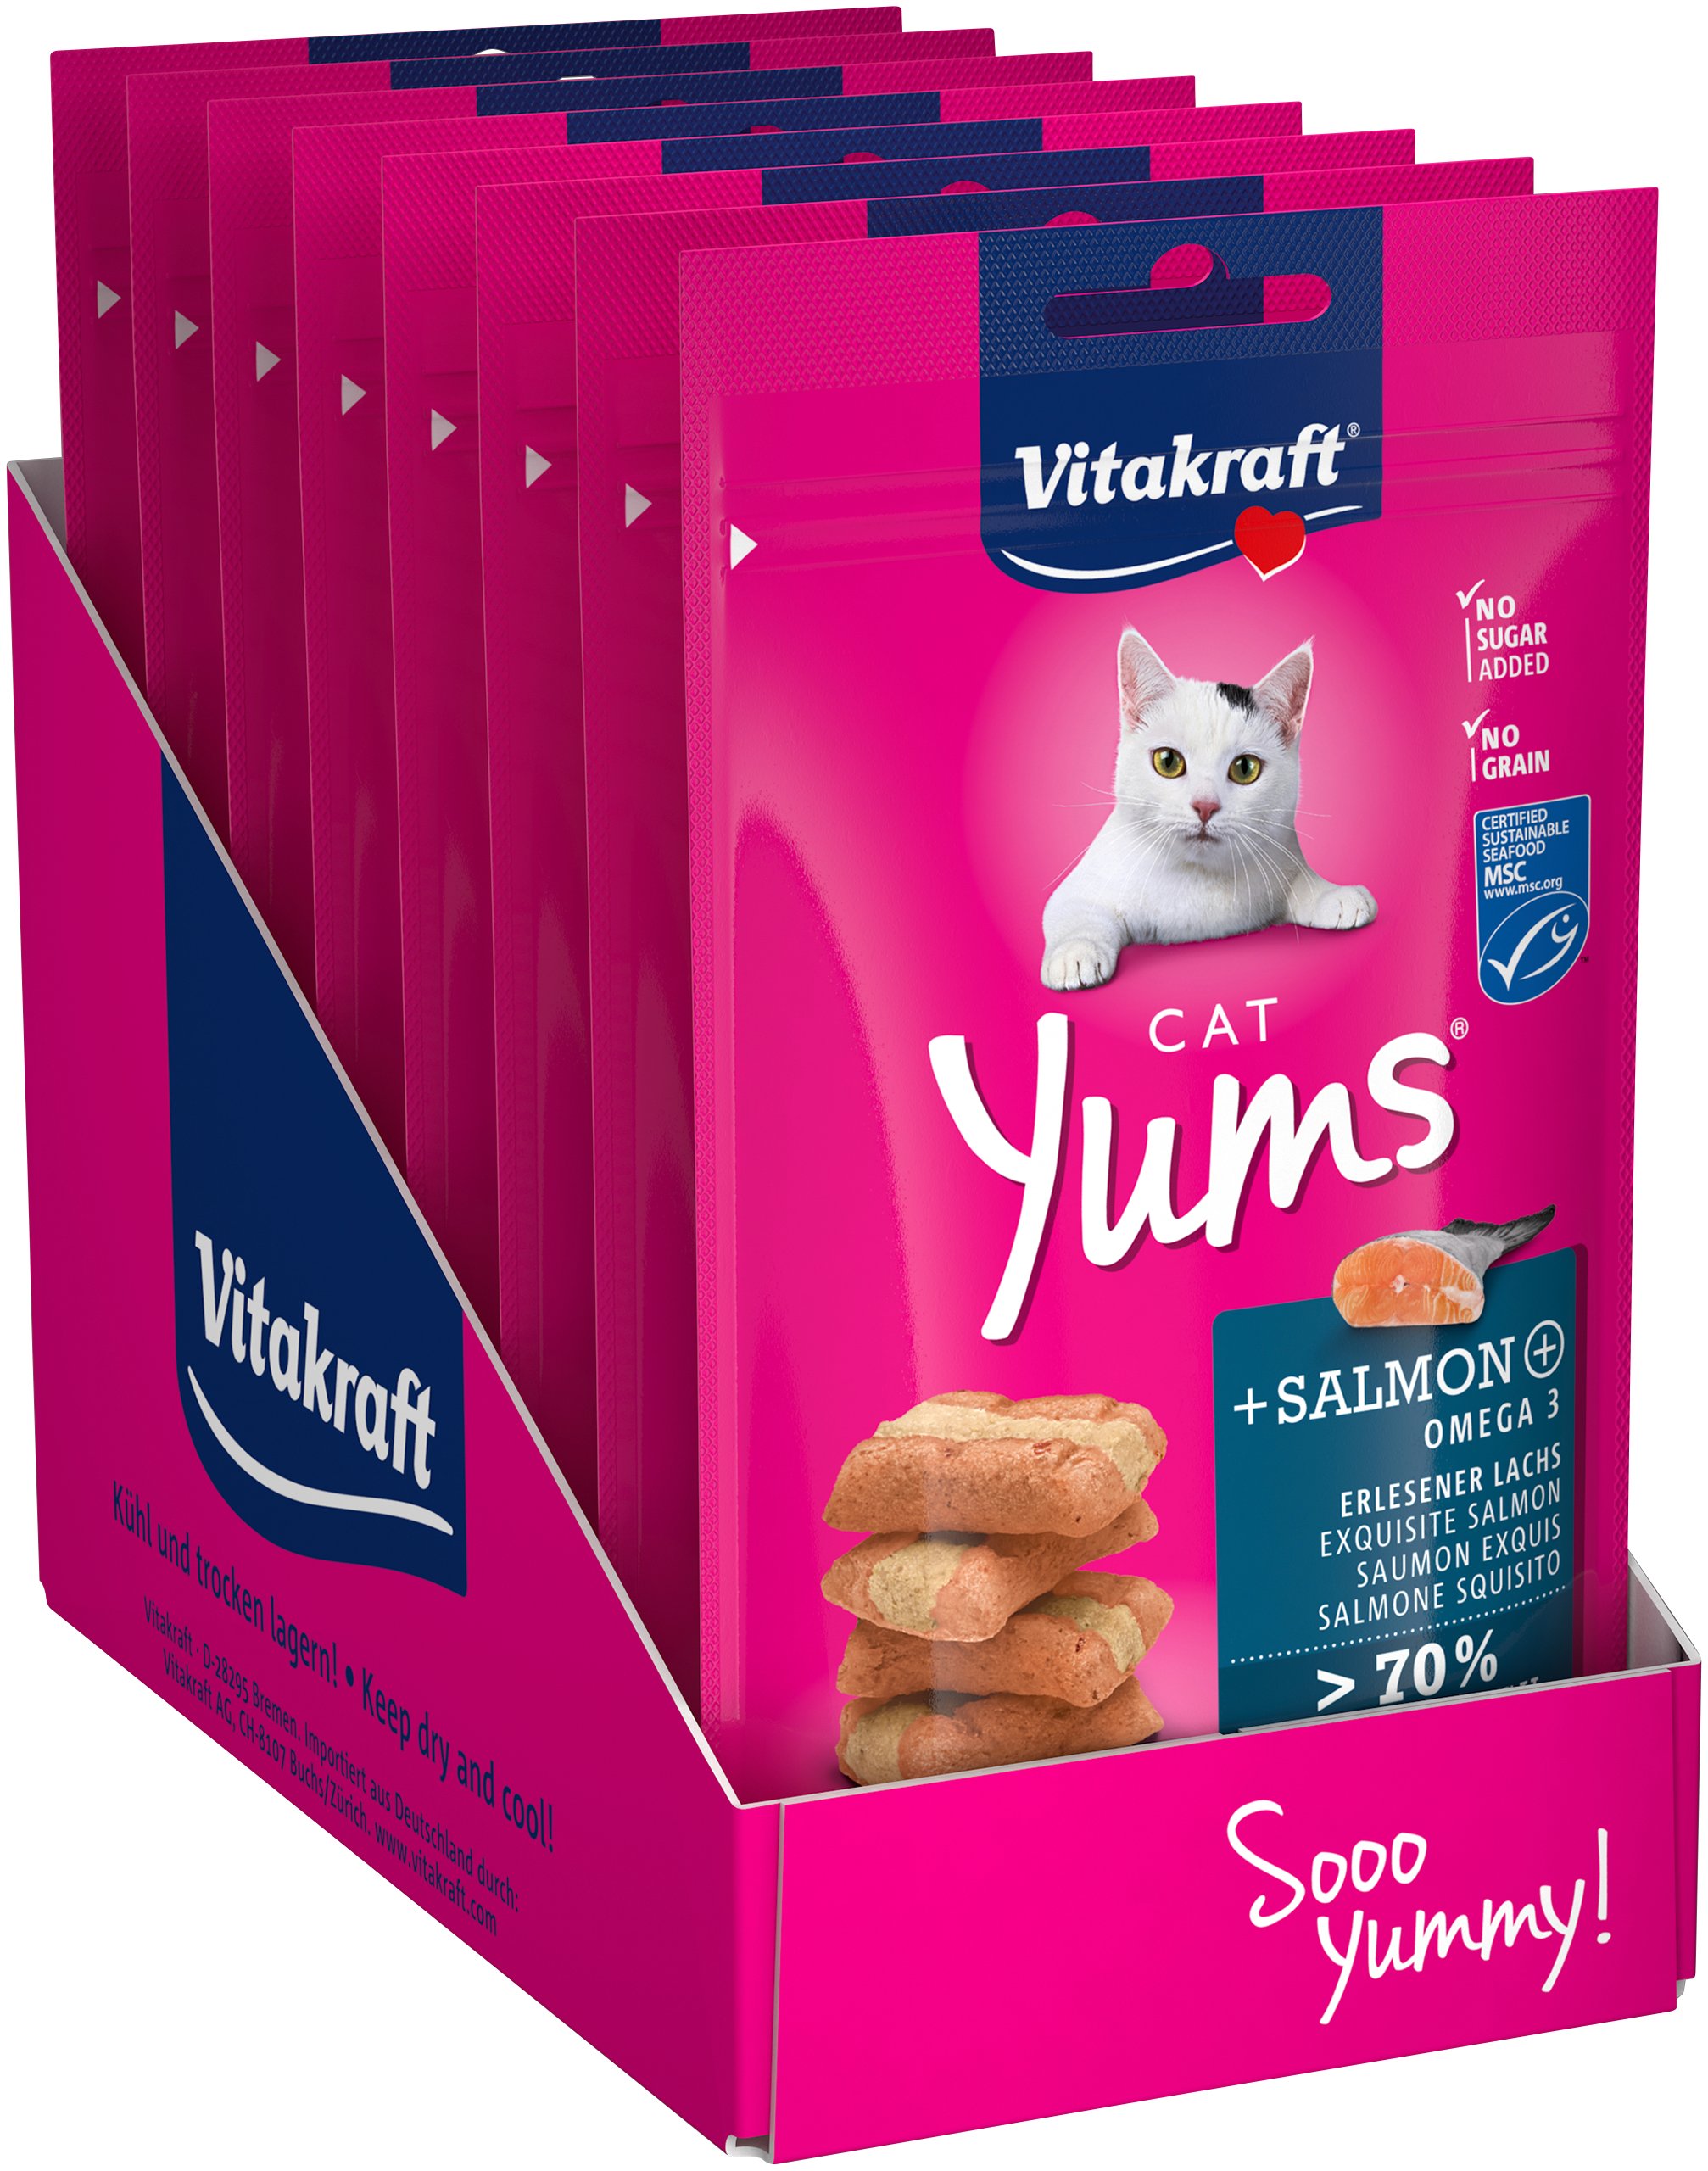 Vitakraft - Cat treats - 9 x Cat Yums salmon MSC 40g - (bundle)